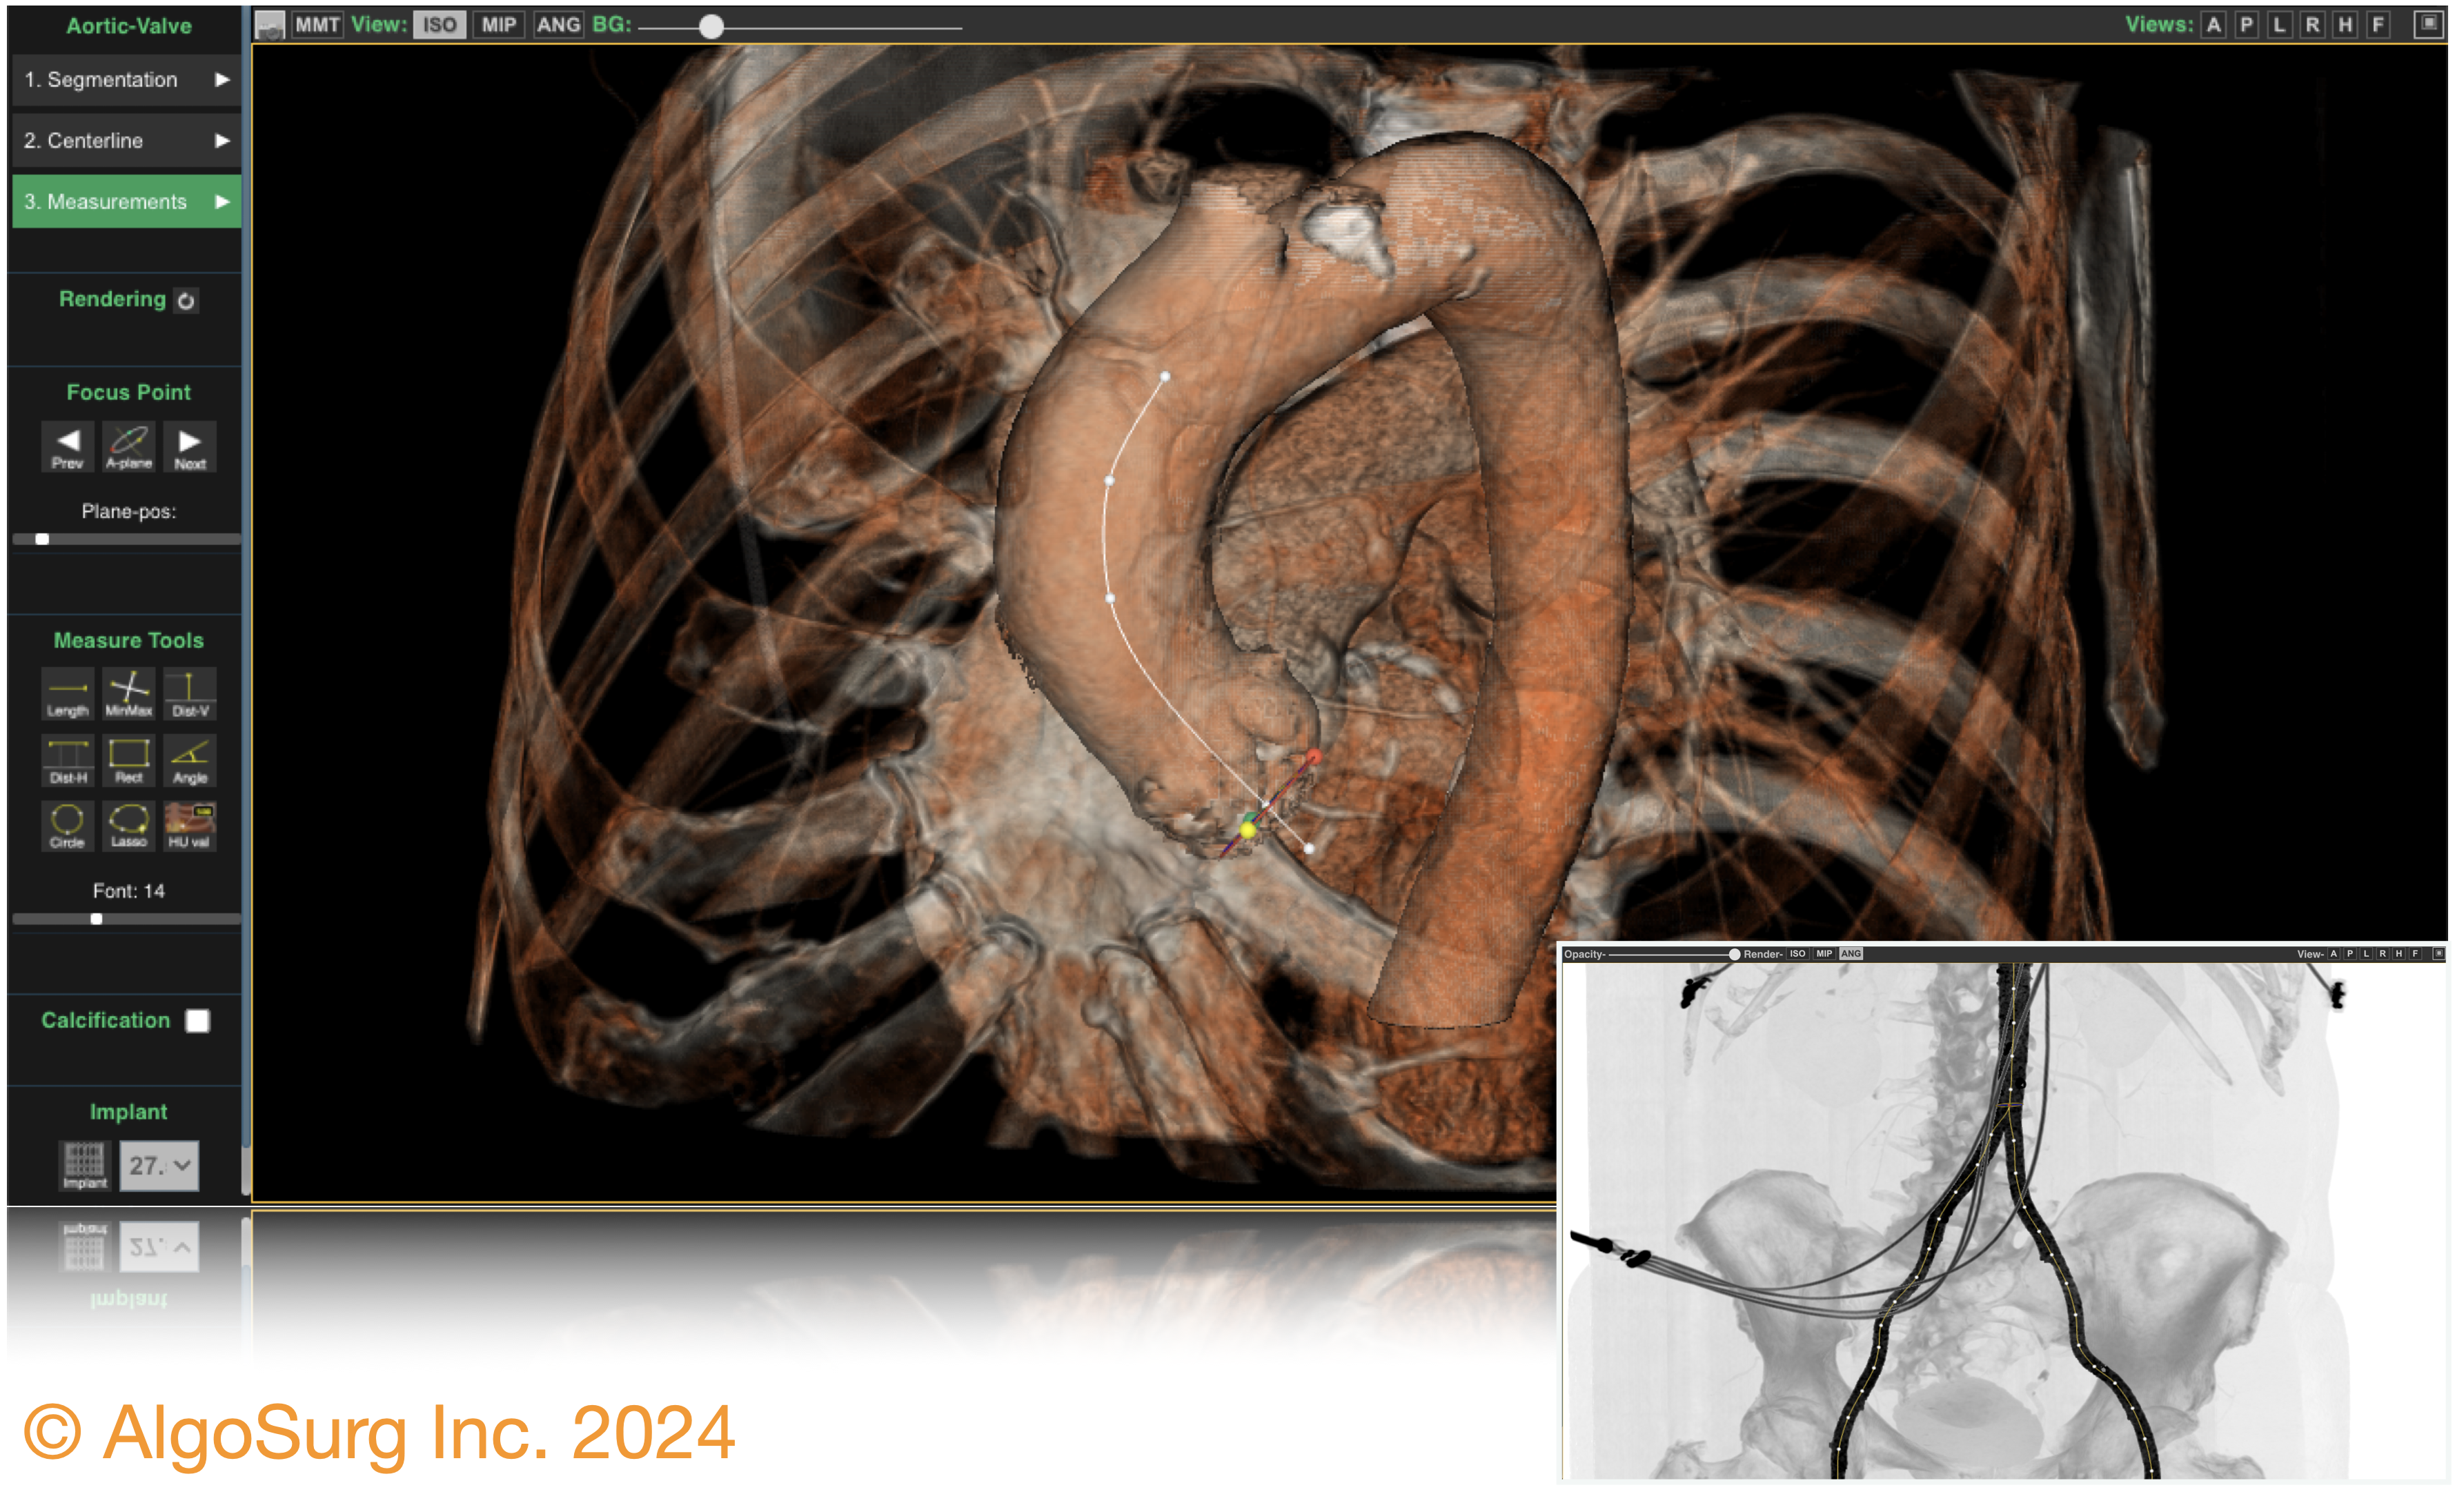 Cardio-Vascular Surgery Planning